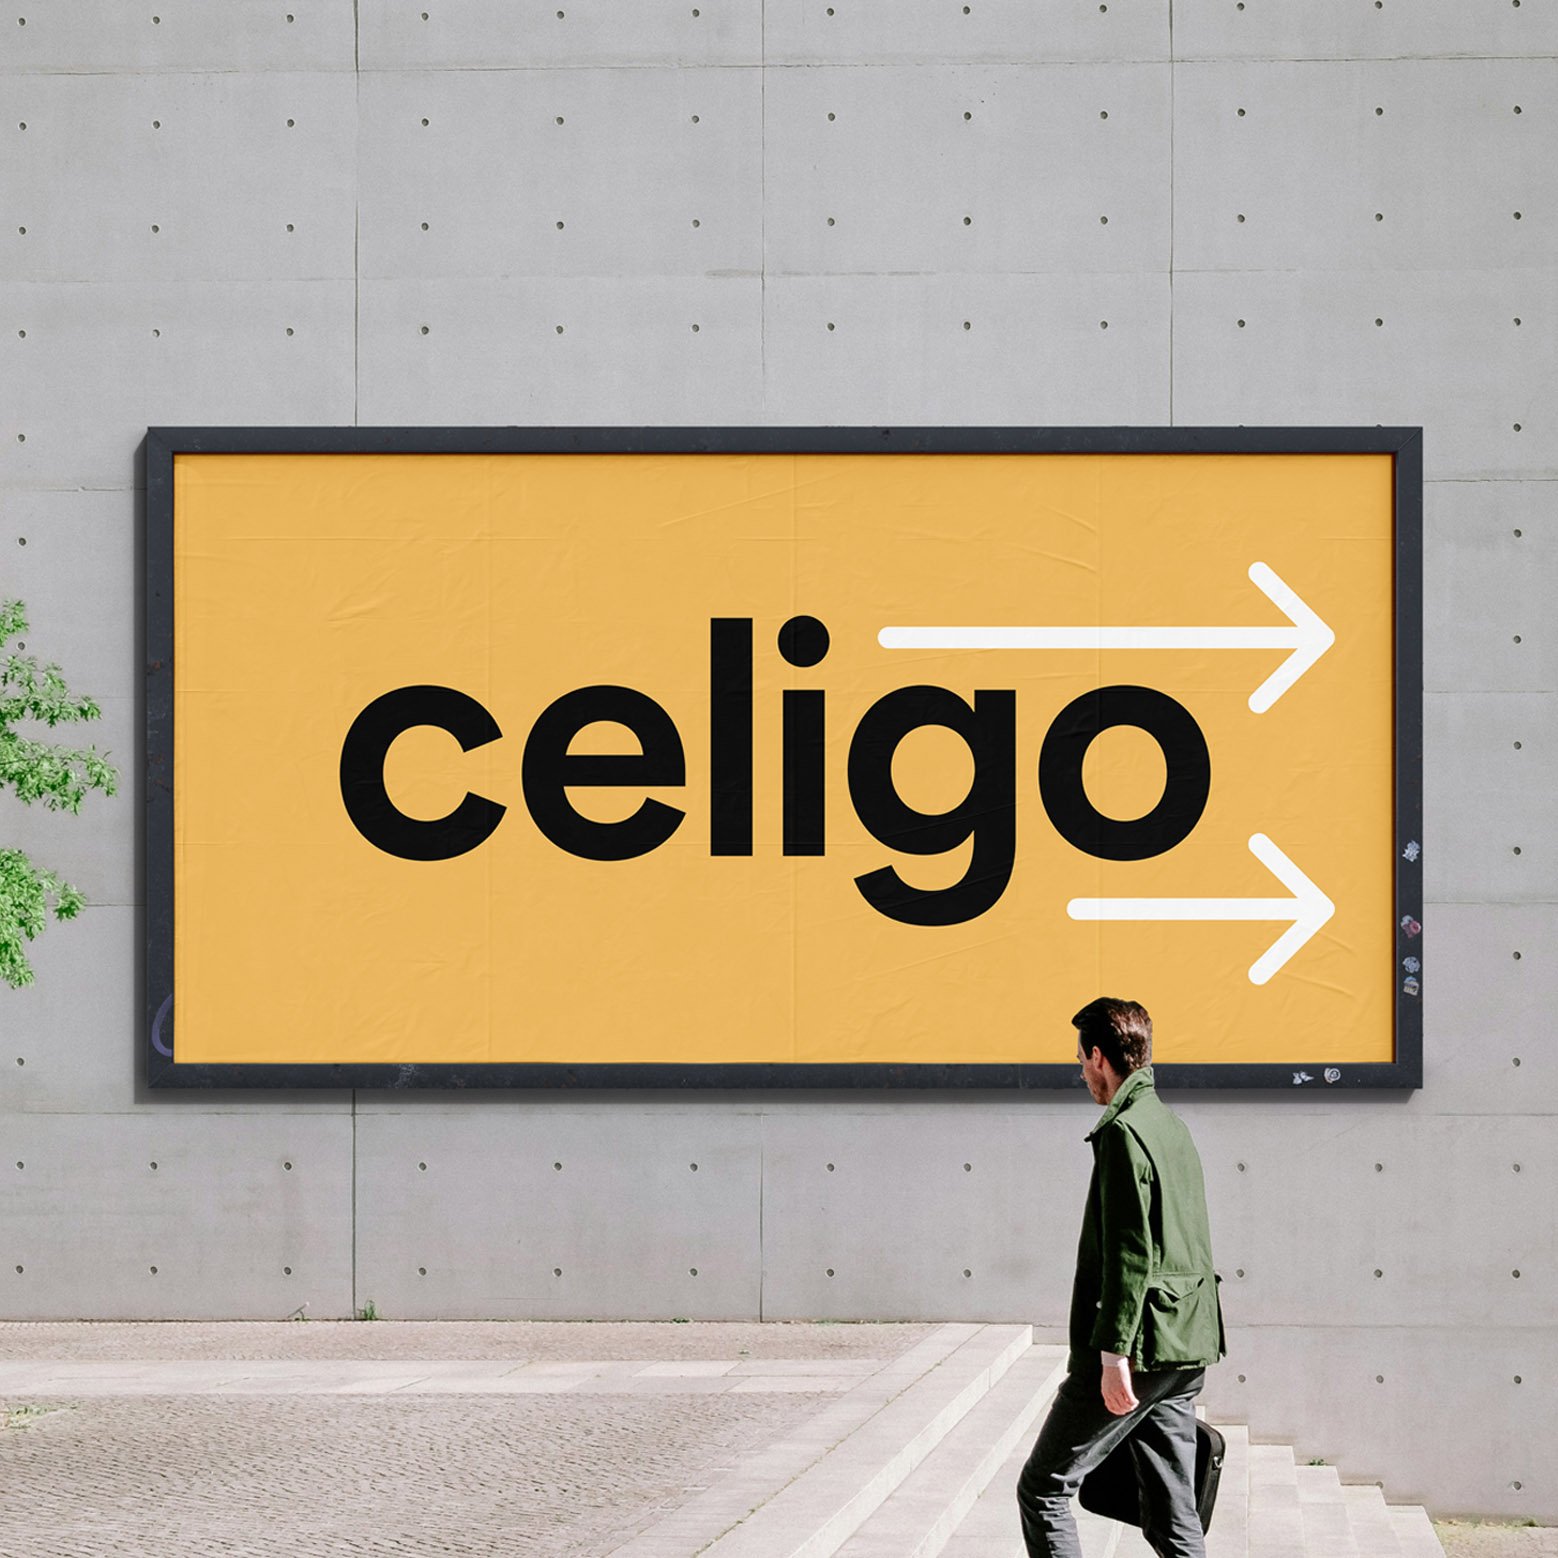 Celigo logo on billboard